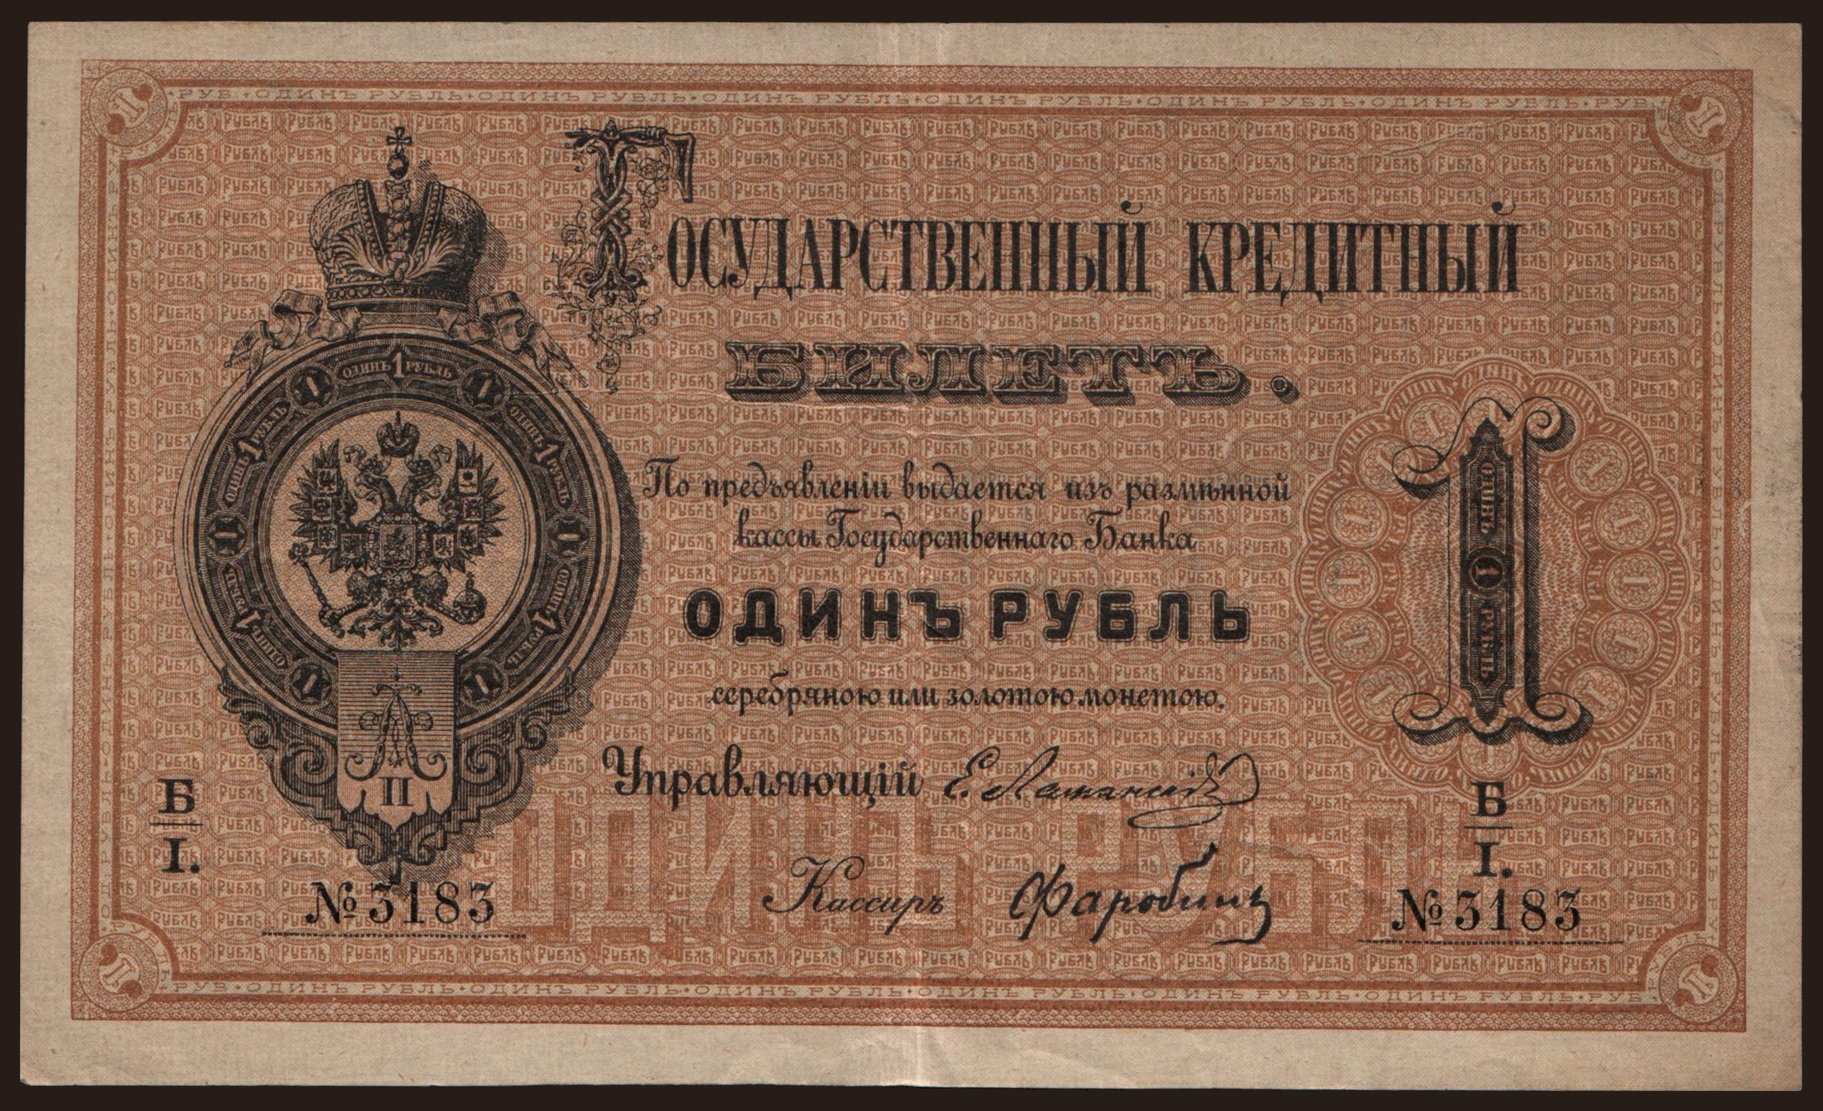 1 rubel, 1878